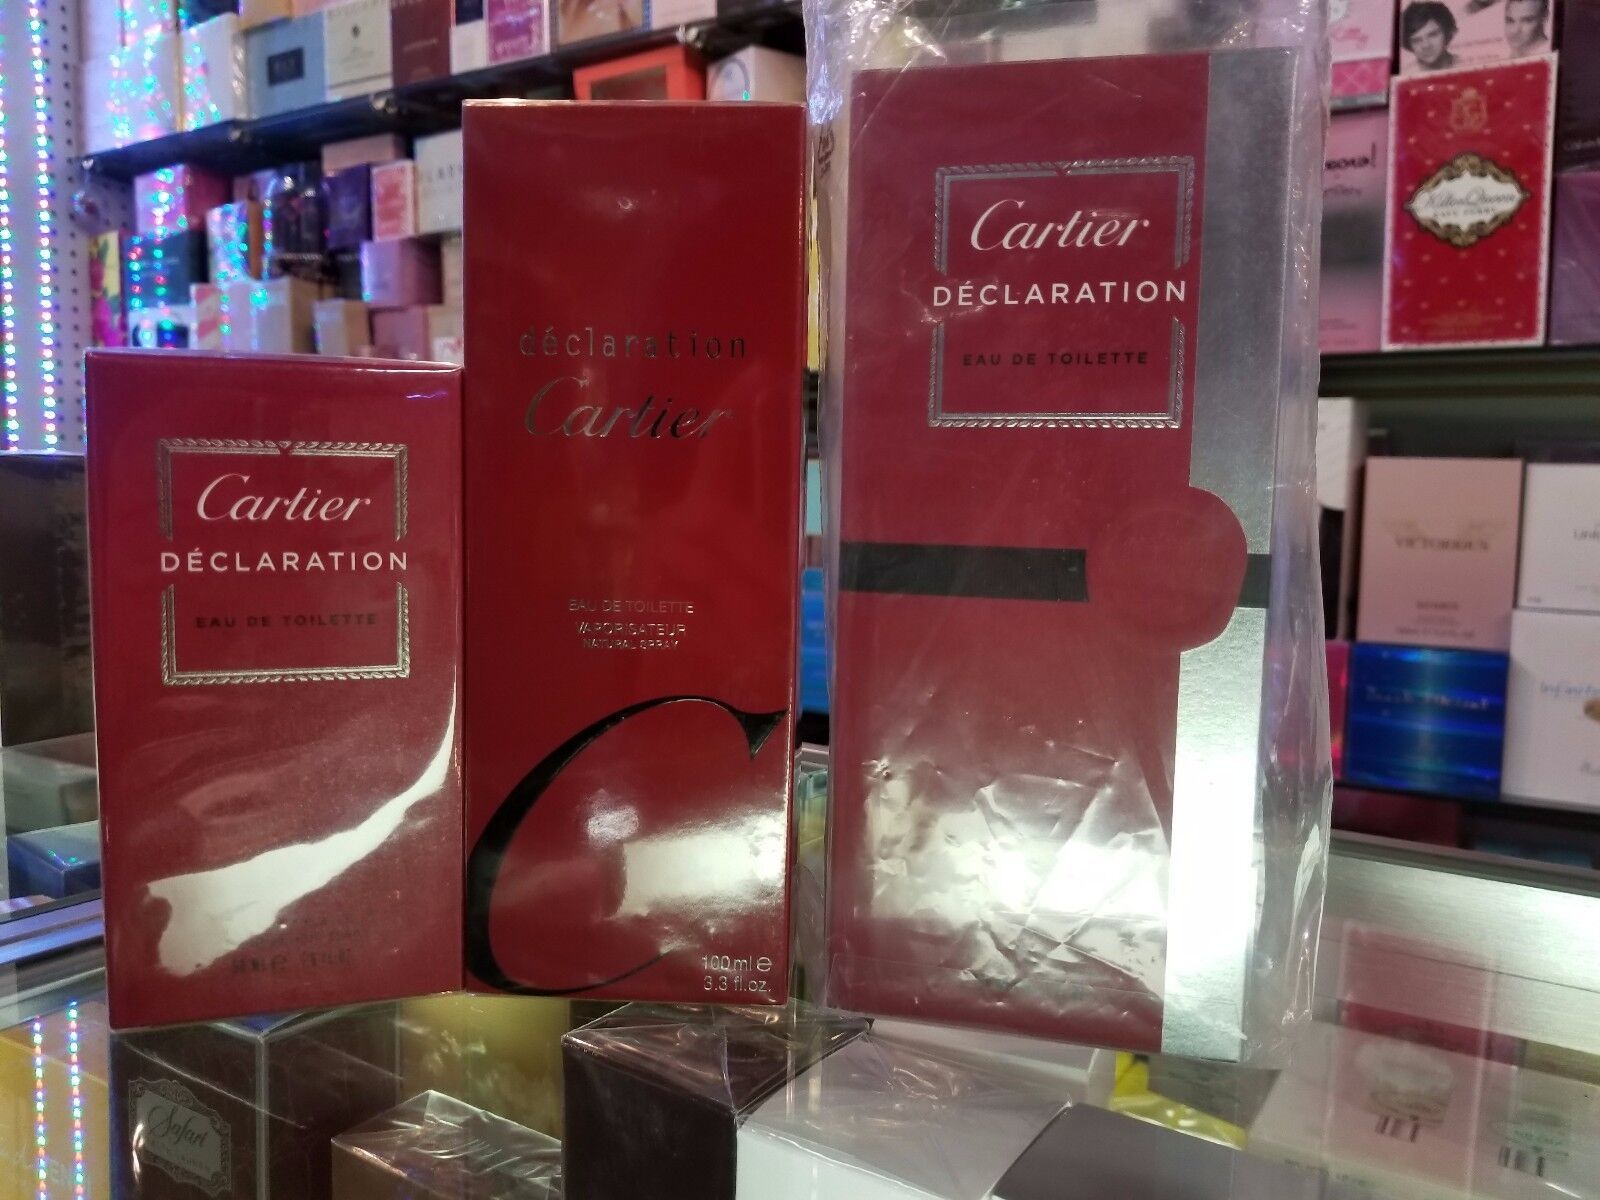 Cartier Declaration 1.6 oz 50 ml | 3.3 oz 100 ml SEALED | 5 oz 150 ml NEW IN BOX - $86.99 - $99.99